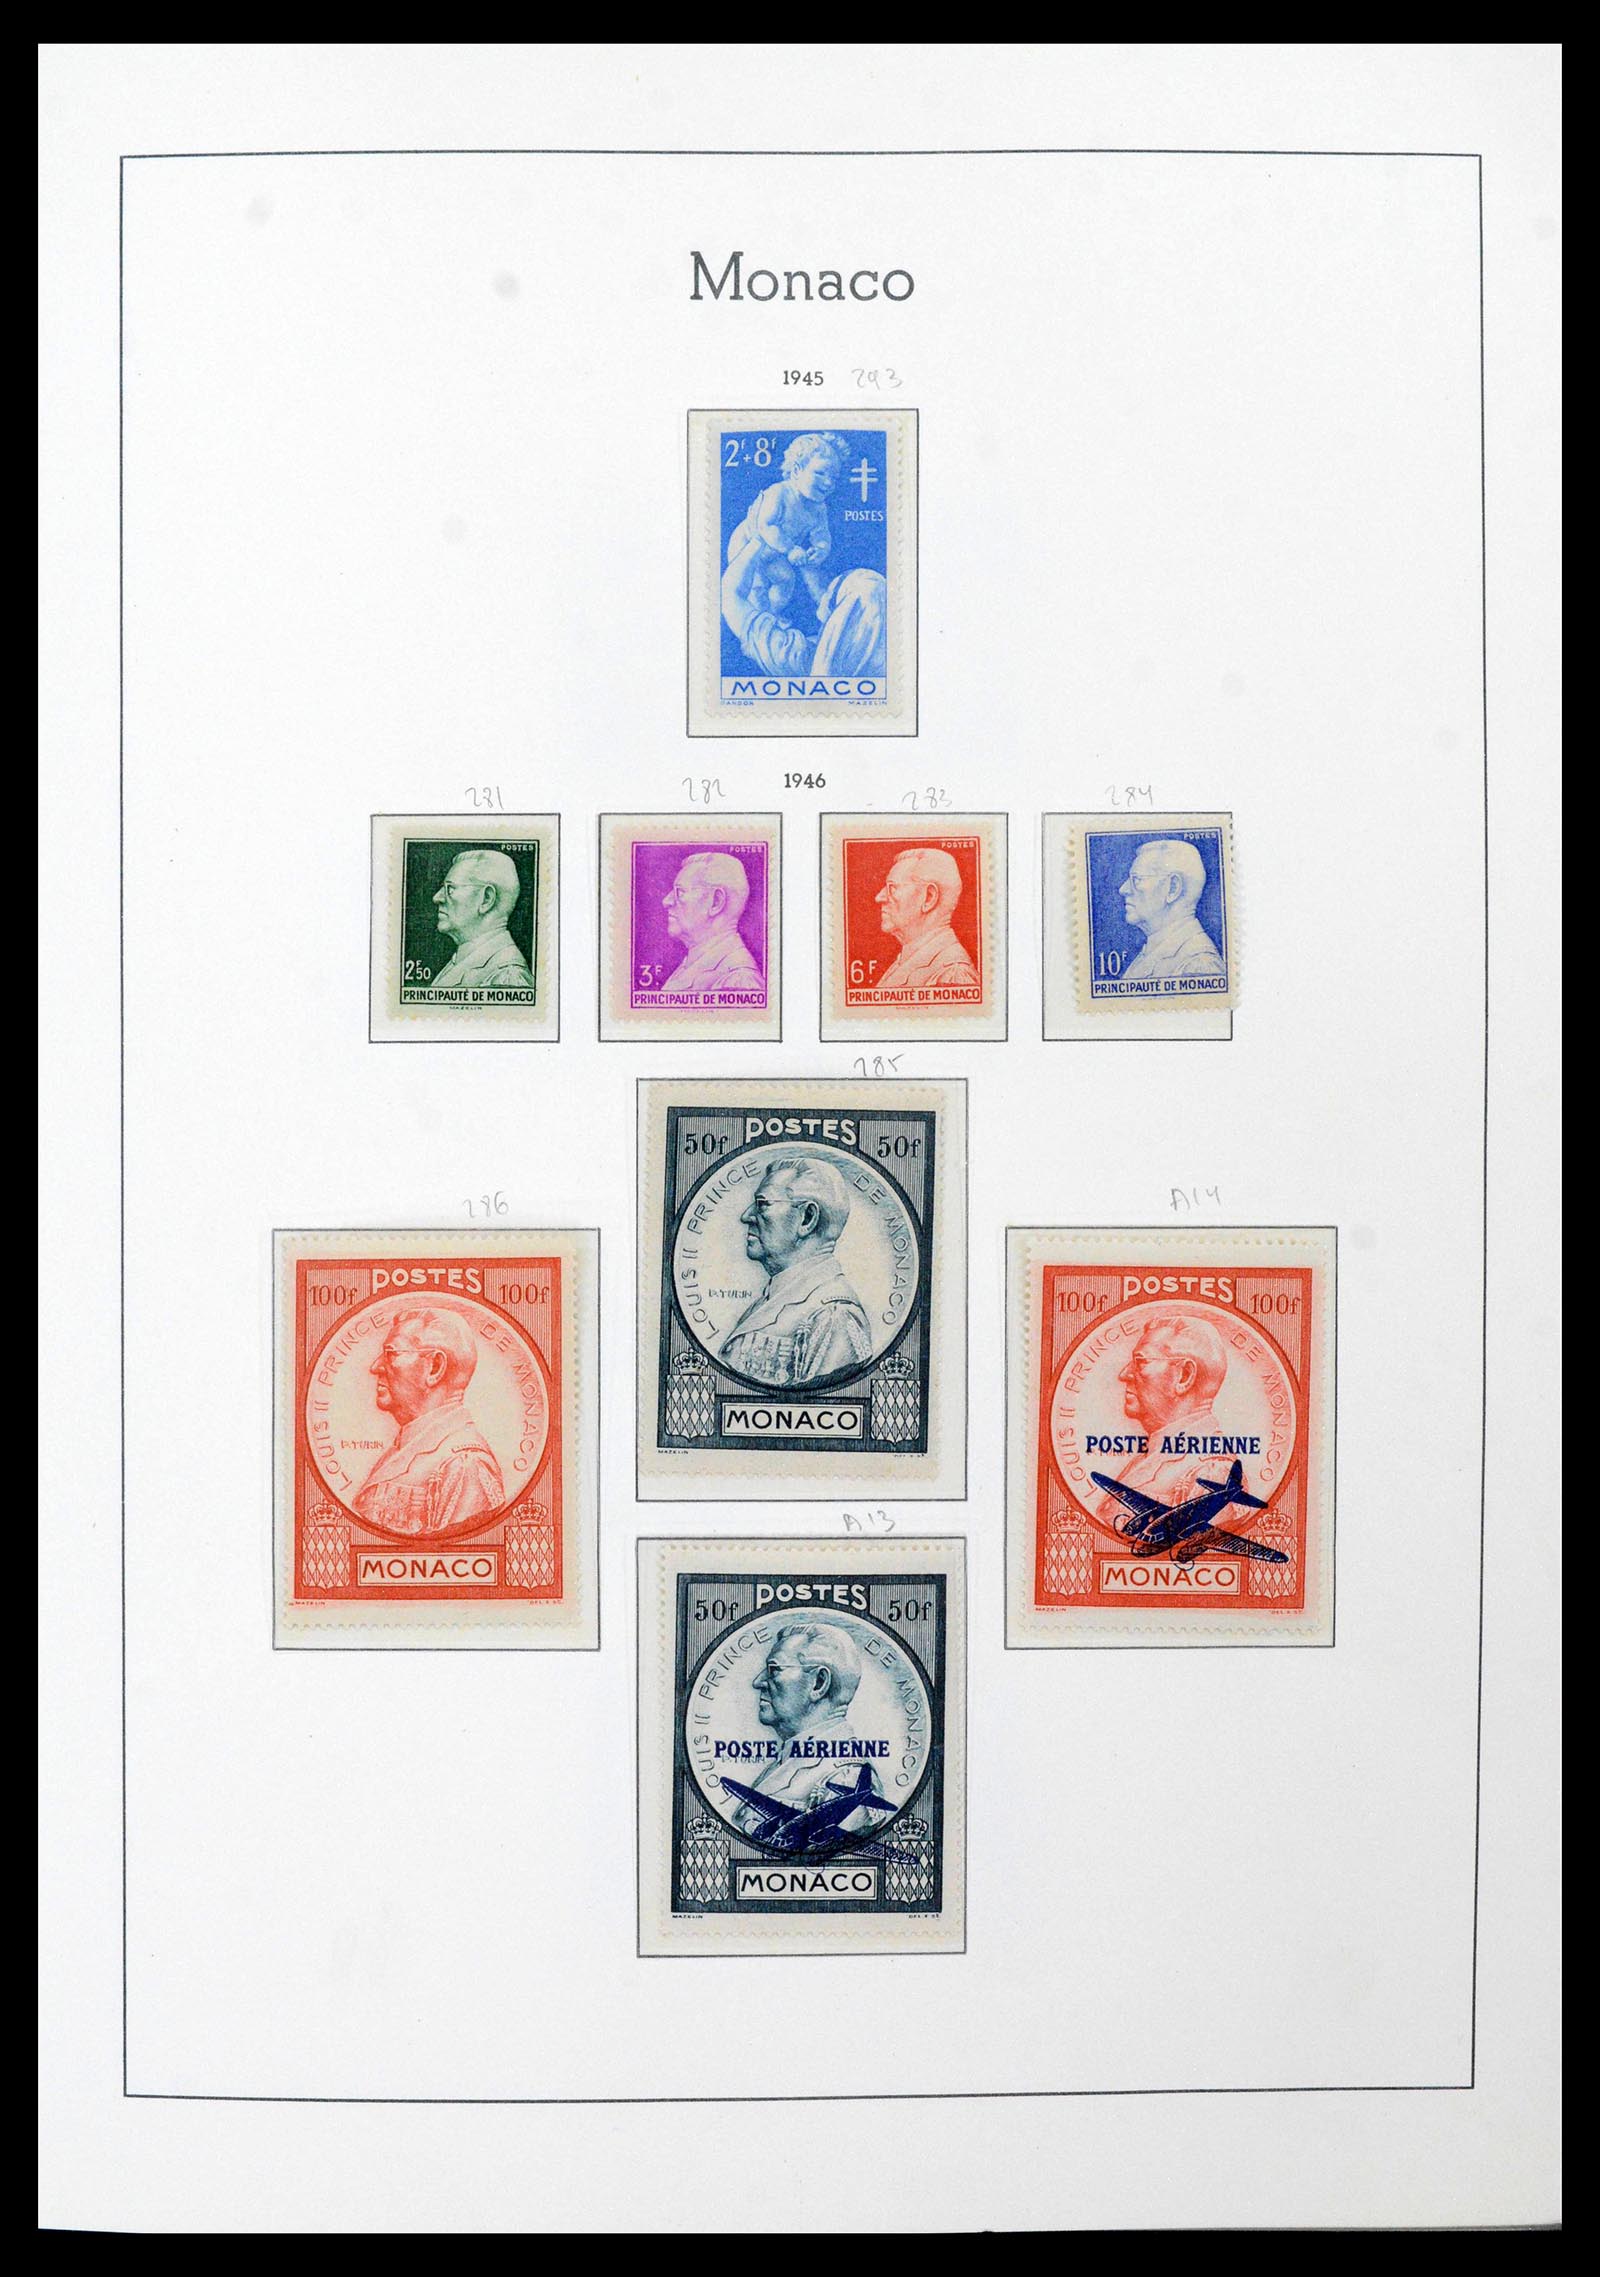 39250 0026 - Stamp collection 39250 Monaco 1885-1995.